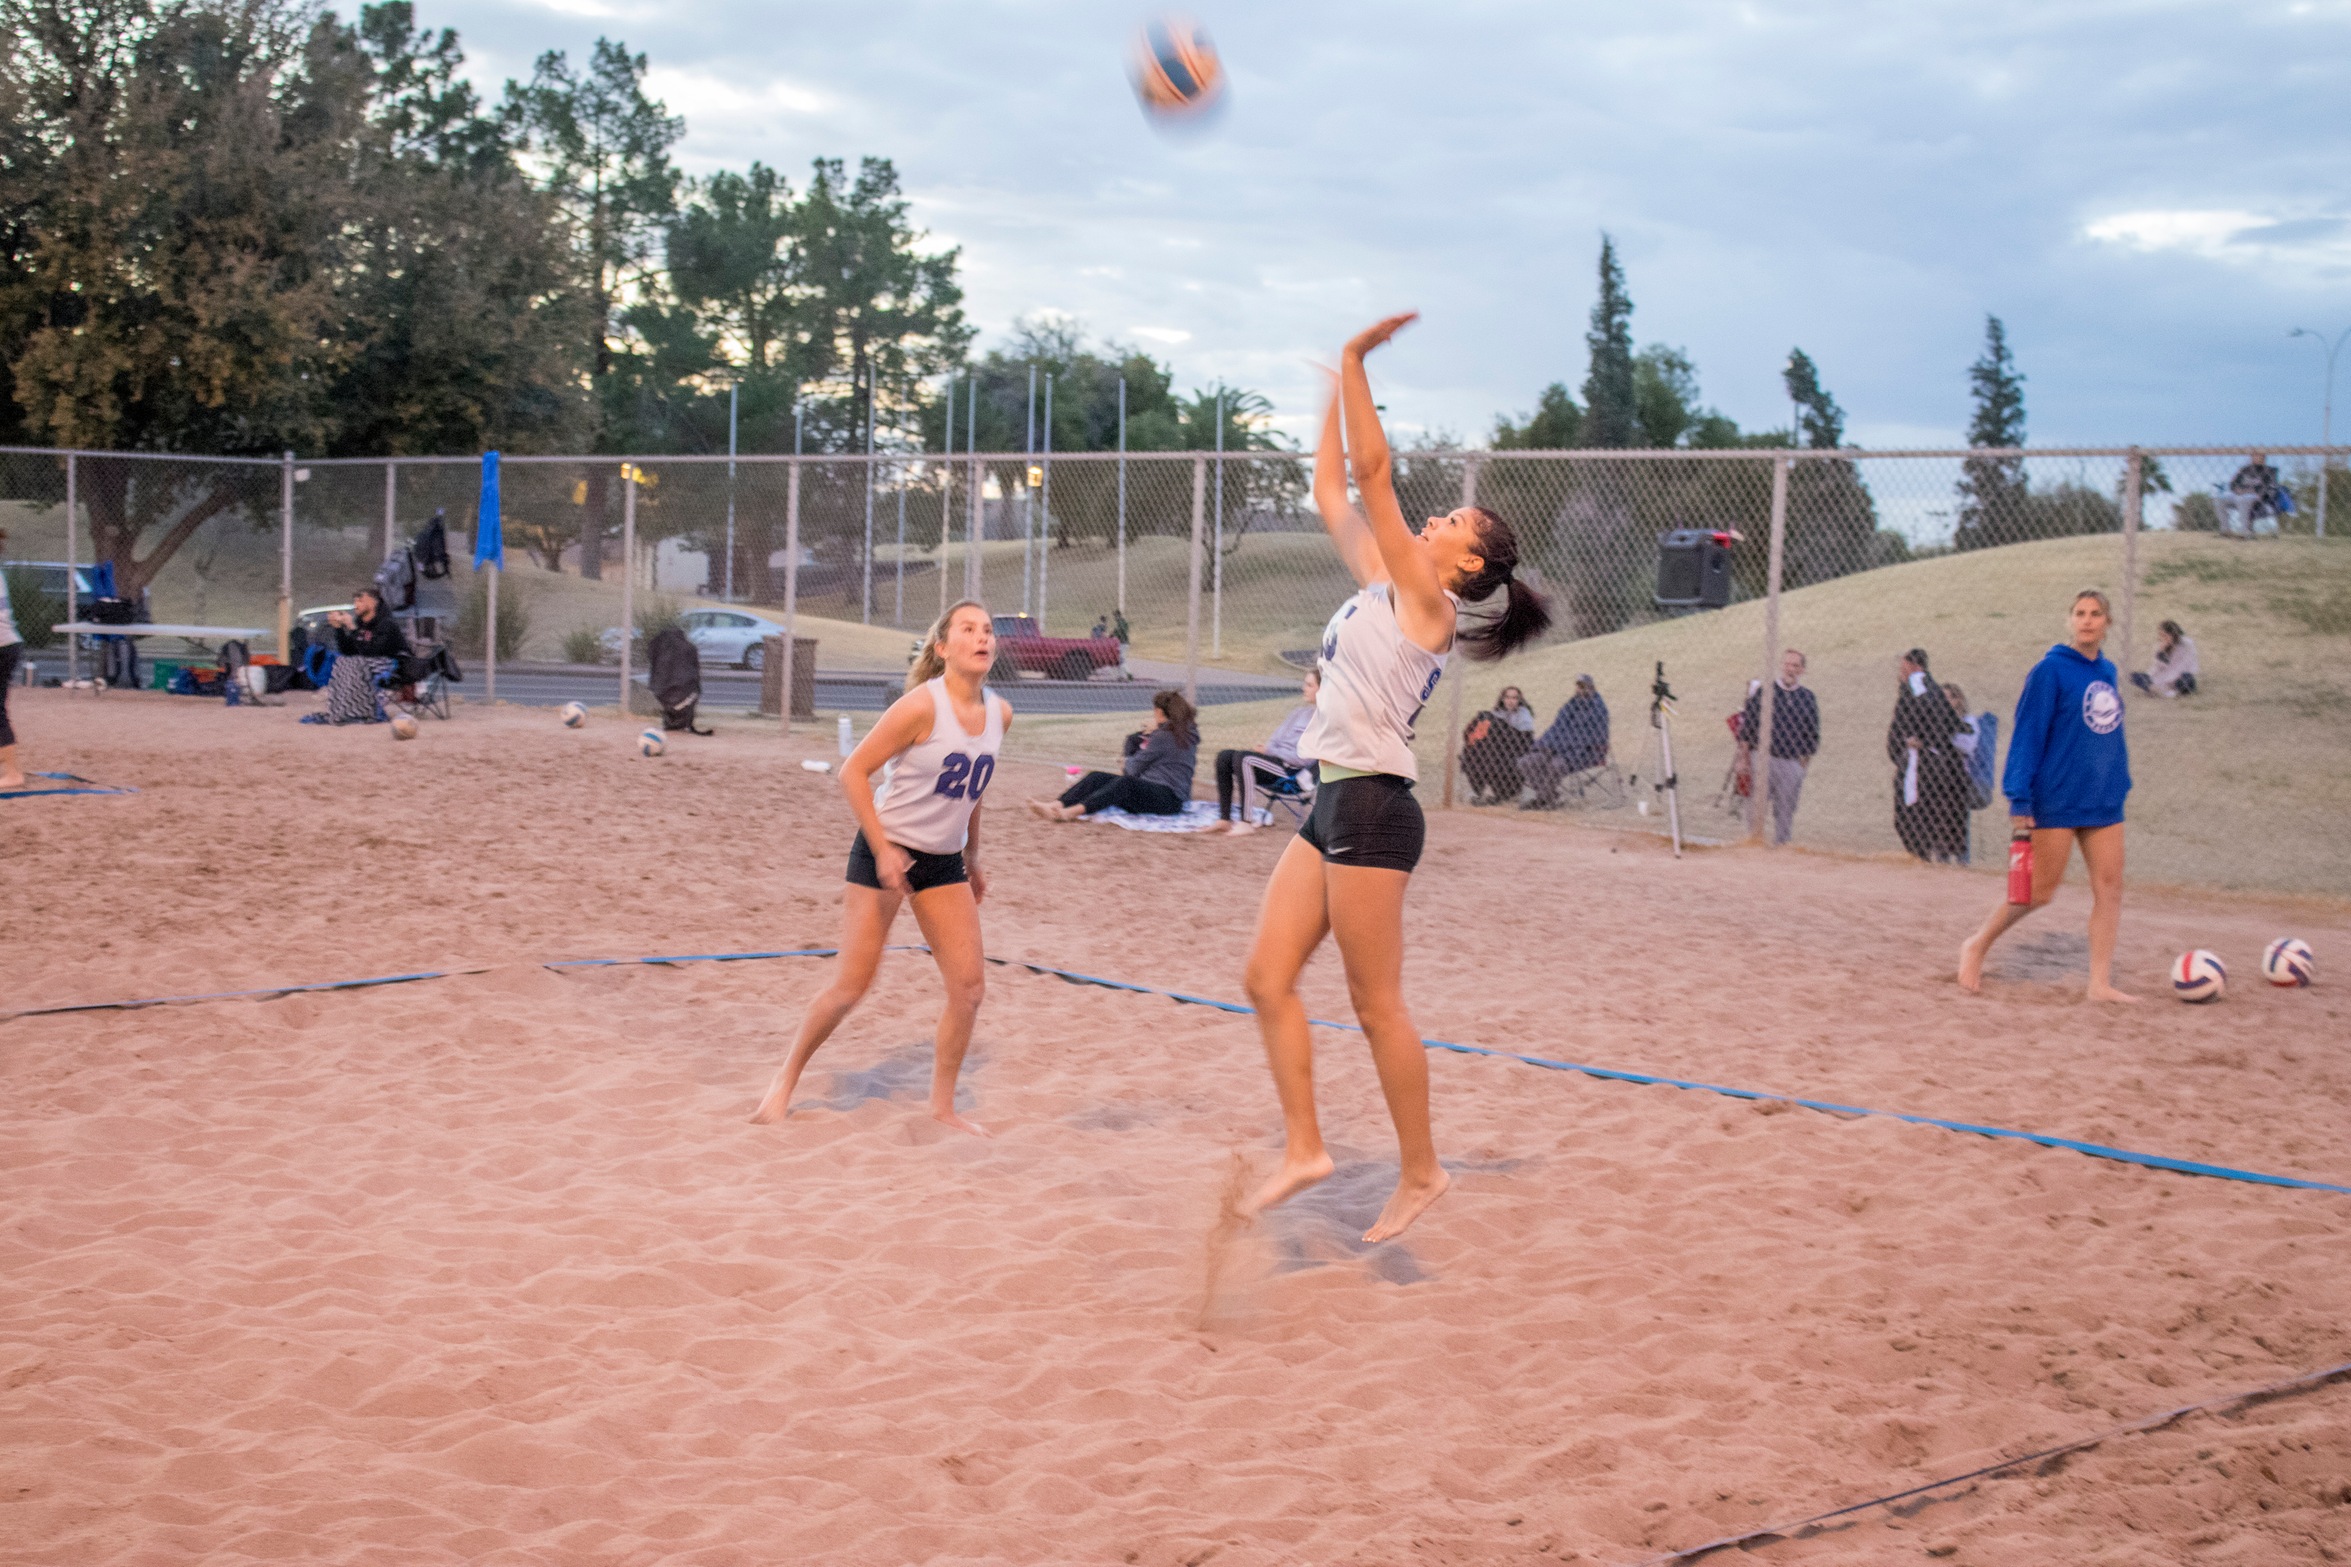 SMCC Beach Volleyball Sweeps the GCU Club Team